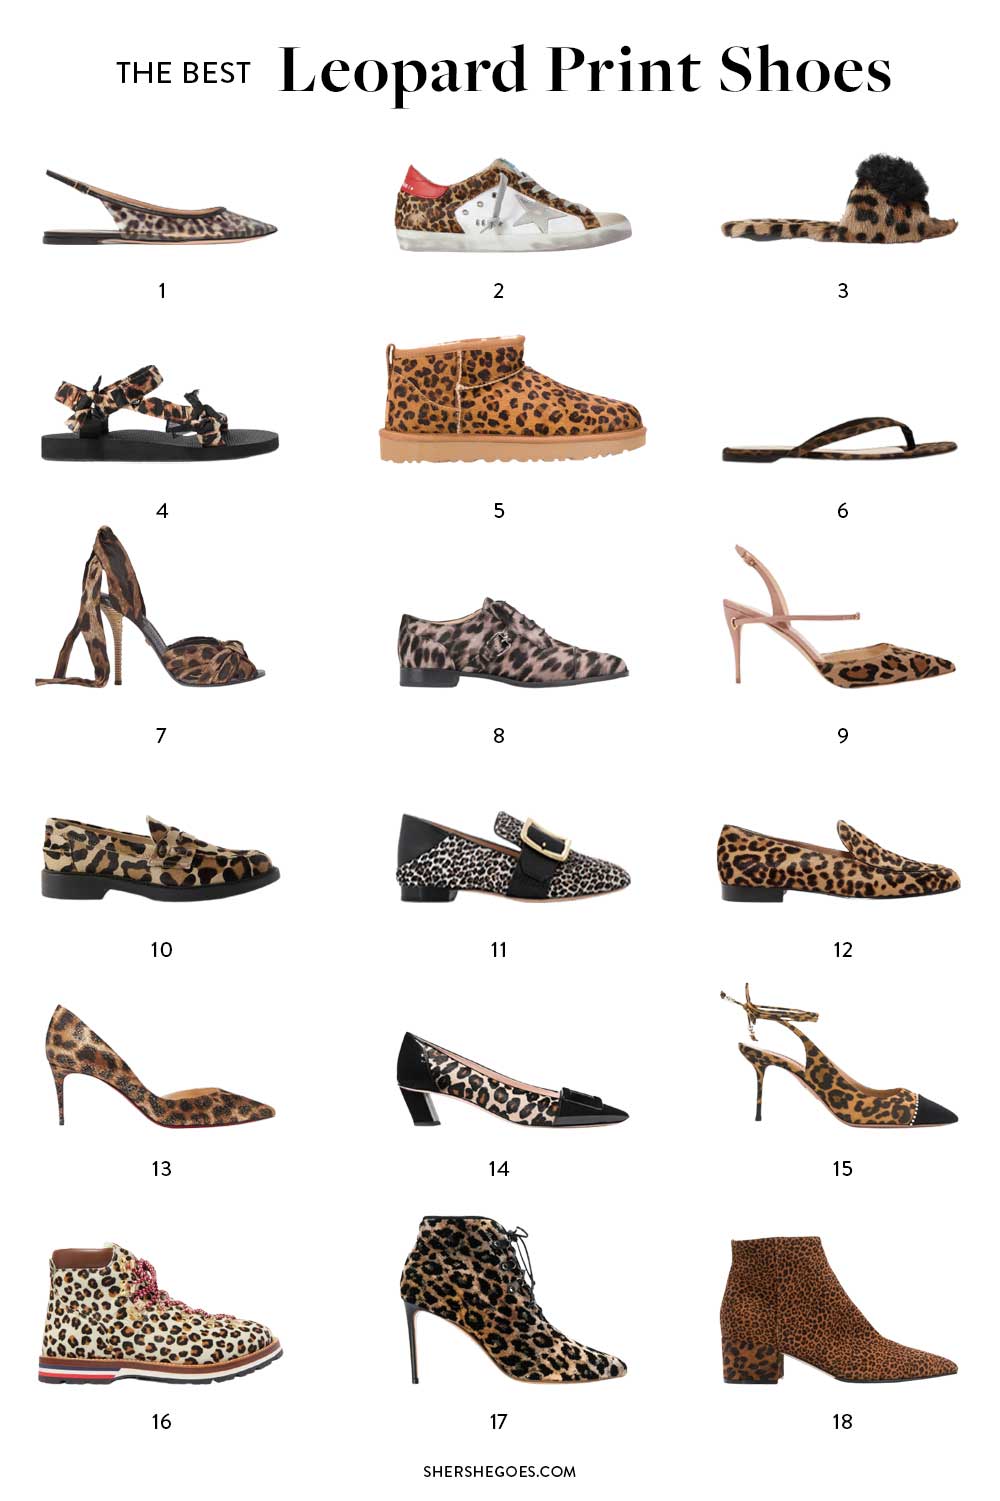 Fysica Hedendaags landbouw The 6 Best Leopard Print Shoes for Women! (2021)